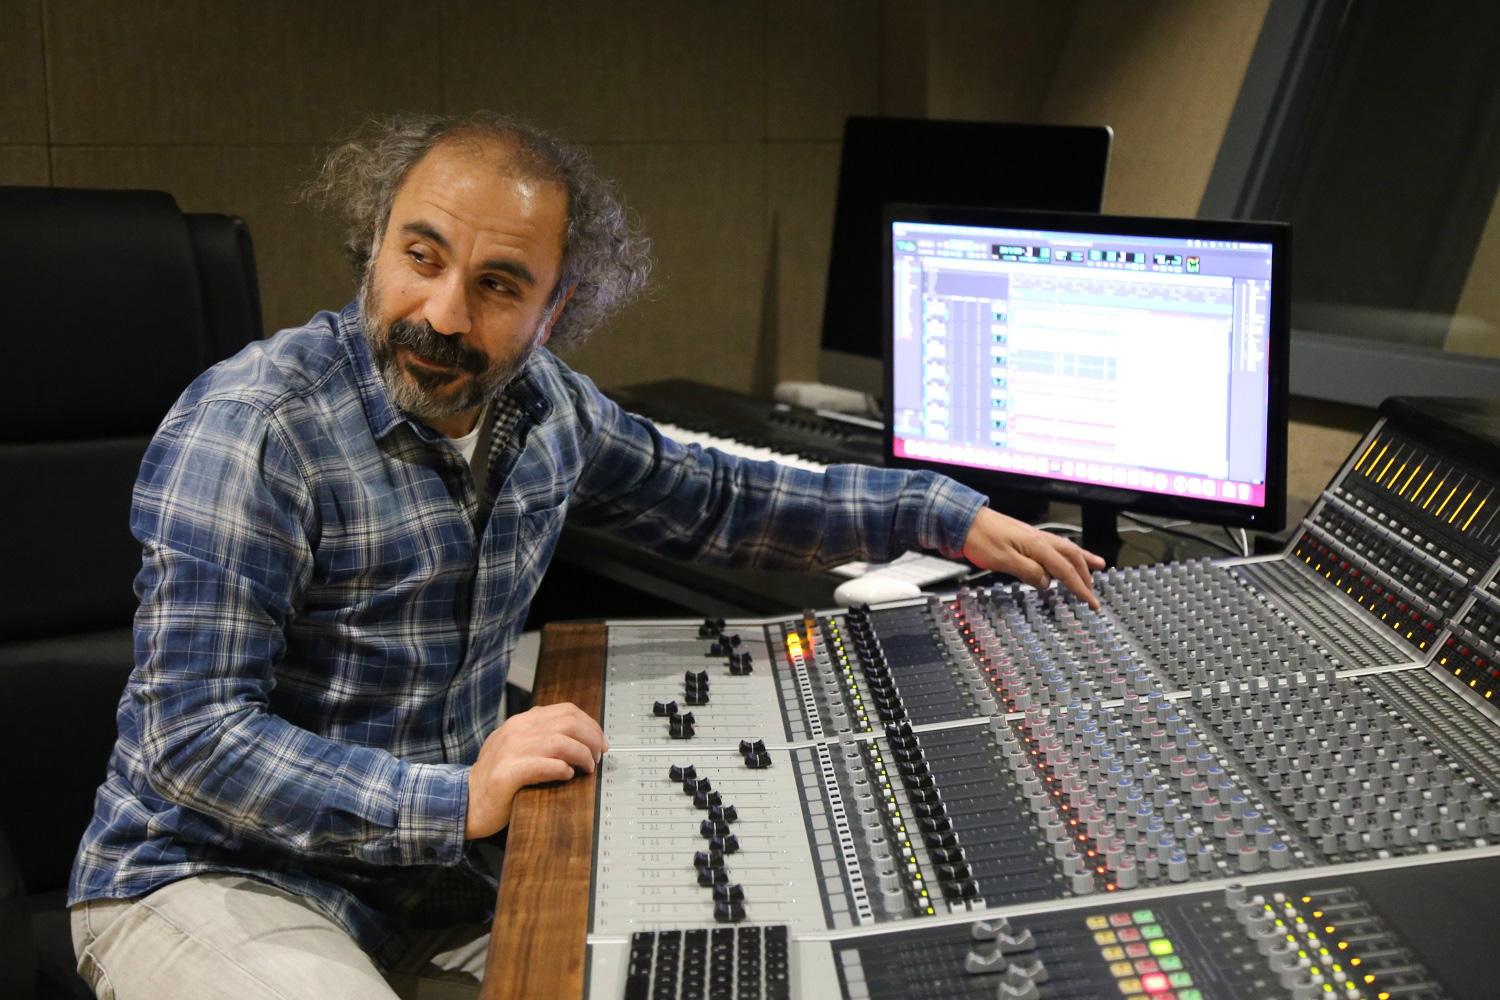 Head of Music Technology, Assoc. Prof. Dr. Abdurrahman Tarikçi